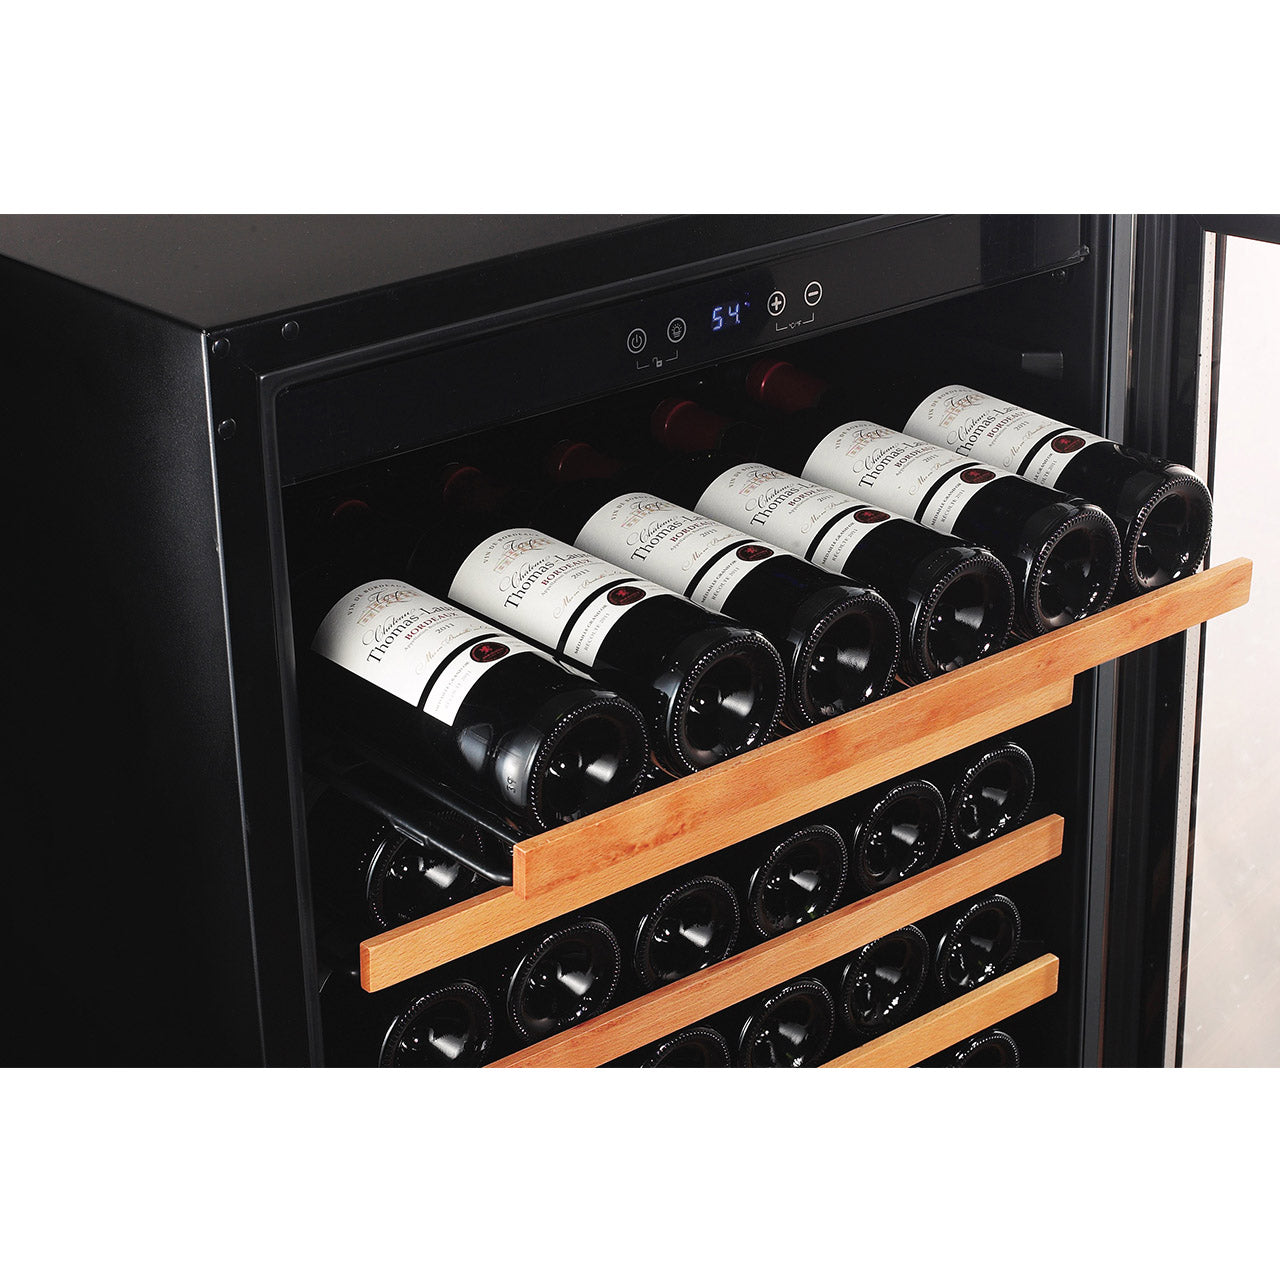 Smith & Hanks 24" Wide Single Zone Wine Cooler | Holds 166 Bottles